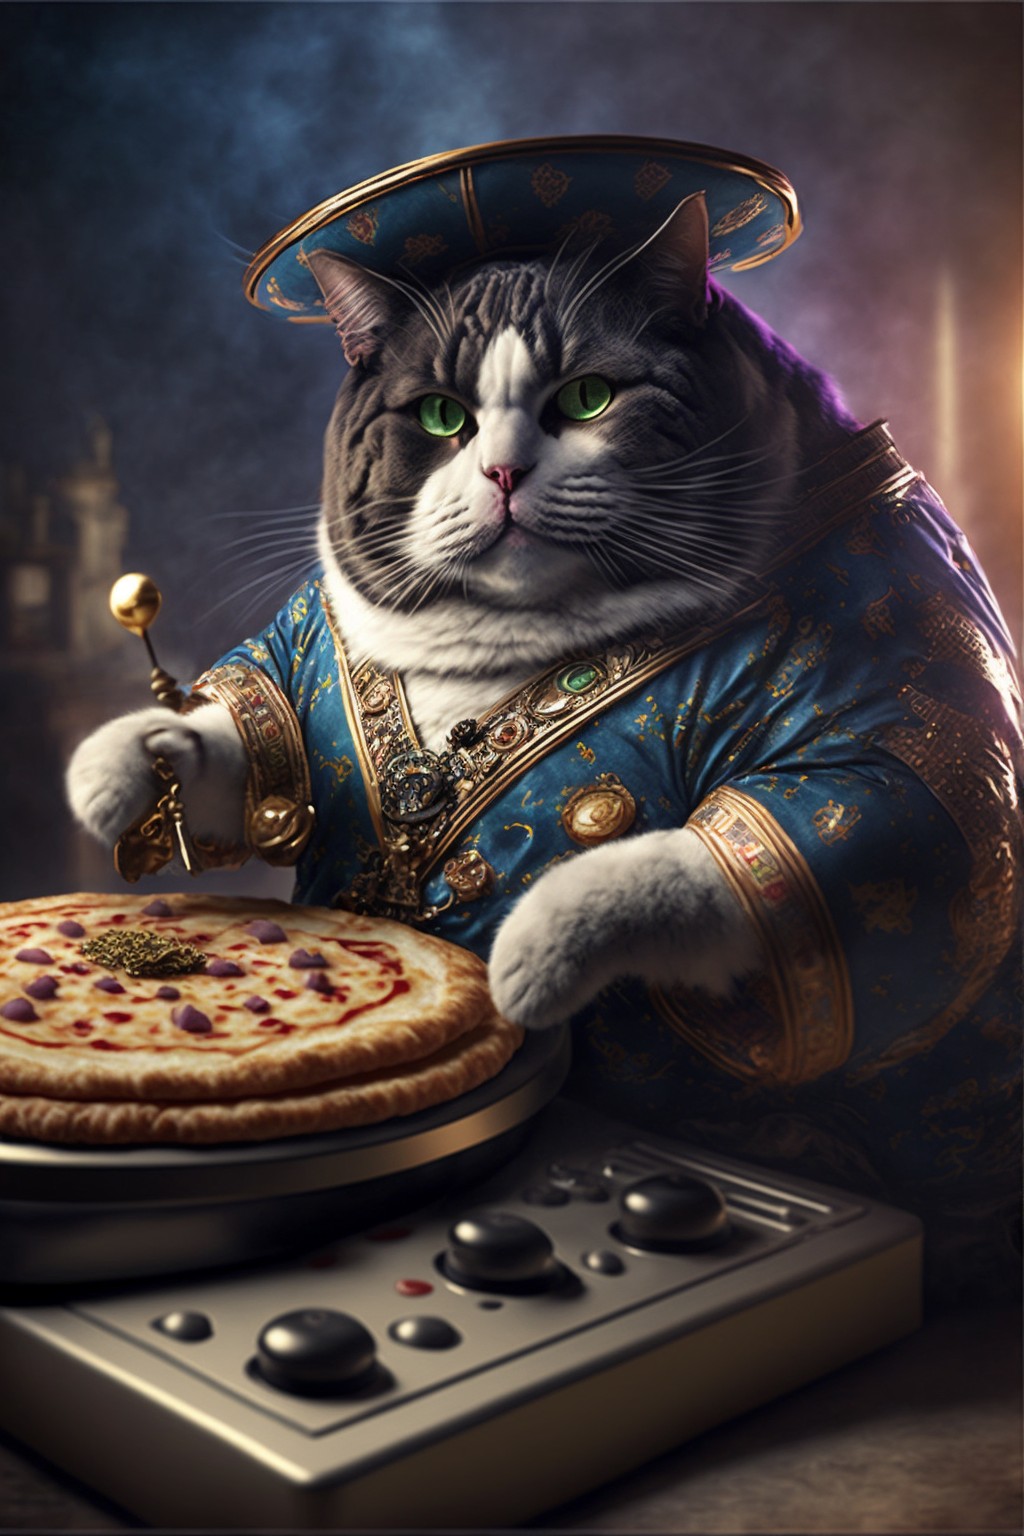 Big fat cat chef is making pizza